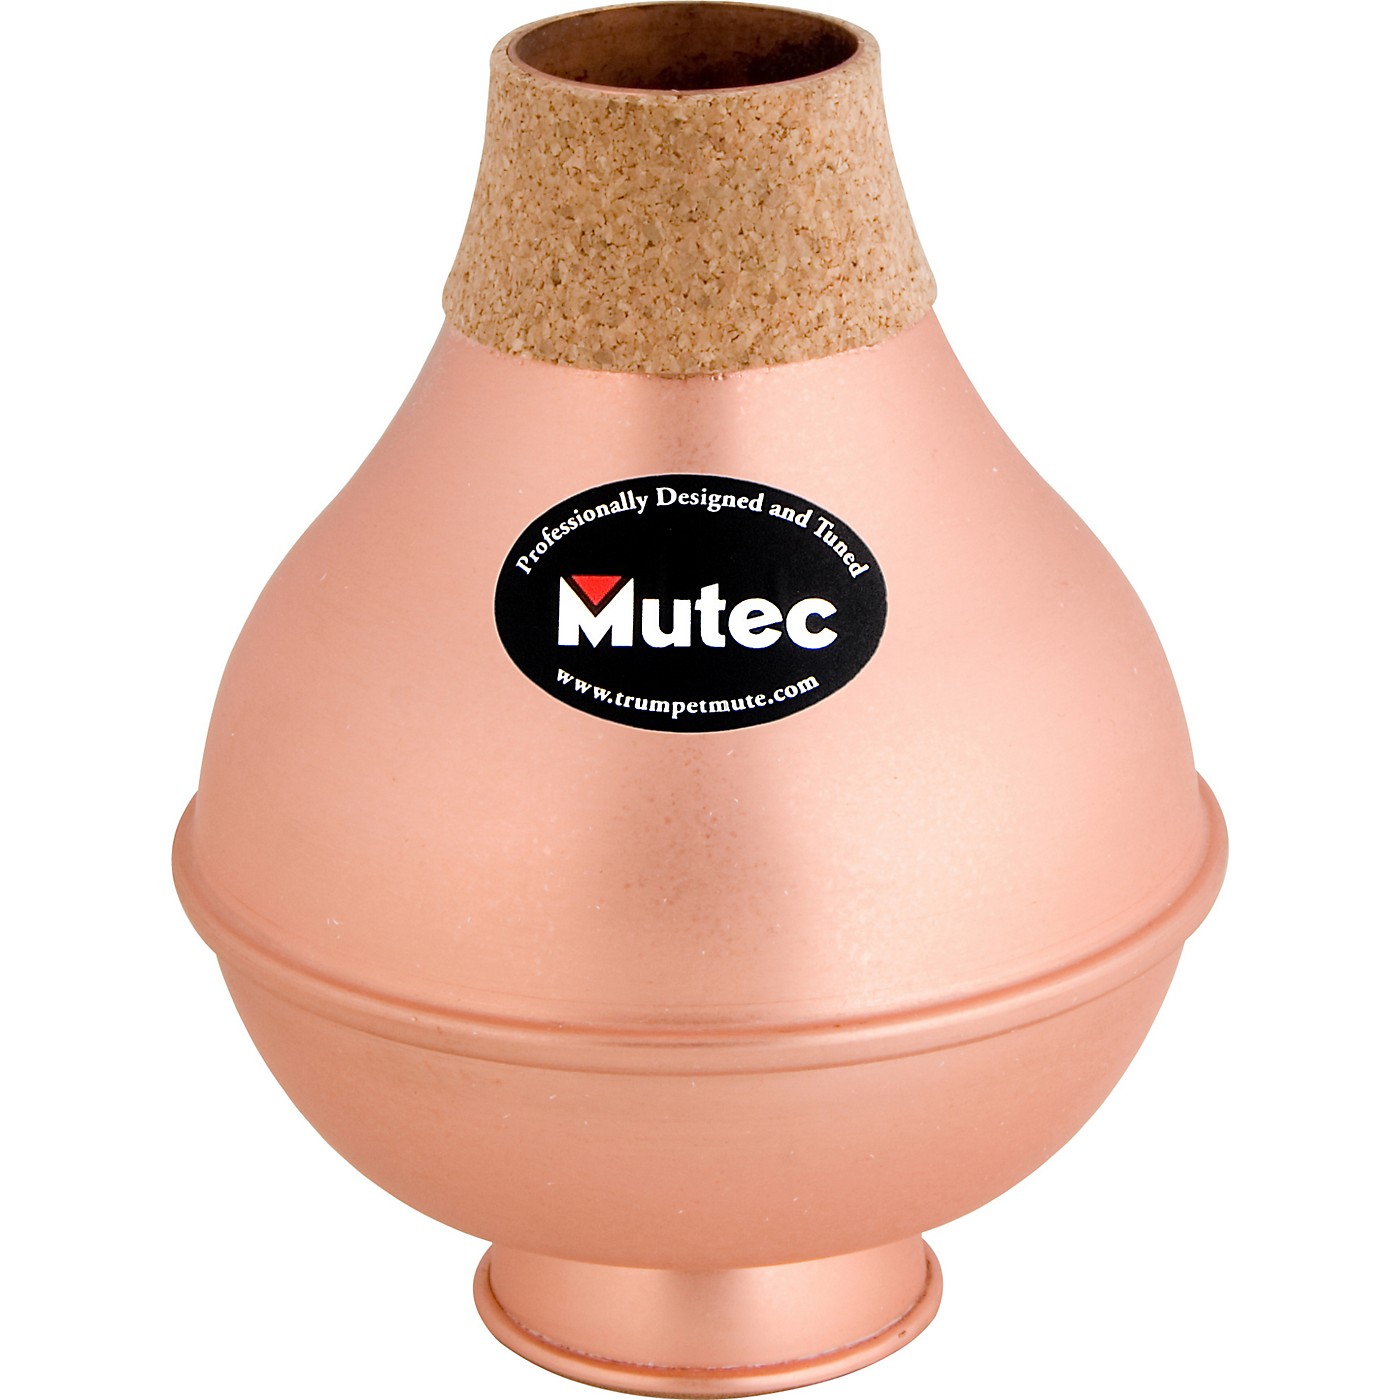 Mutec MHT131 Copper Trumpet Bubble Style Mute thumbnail